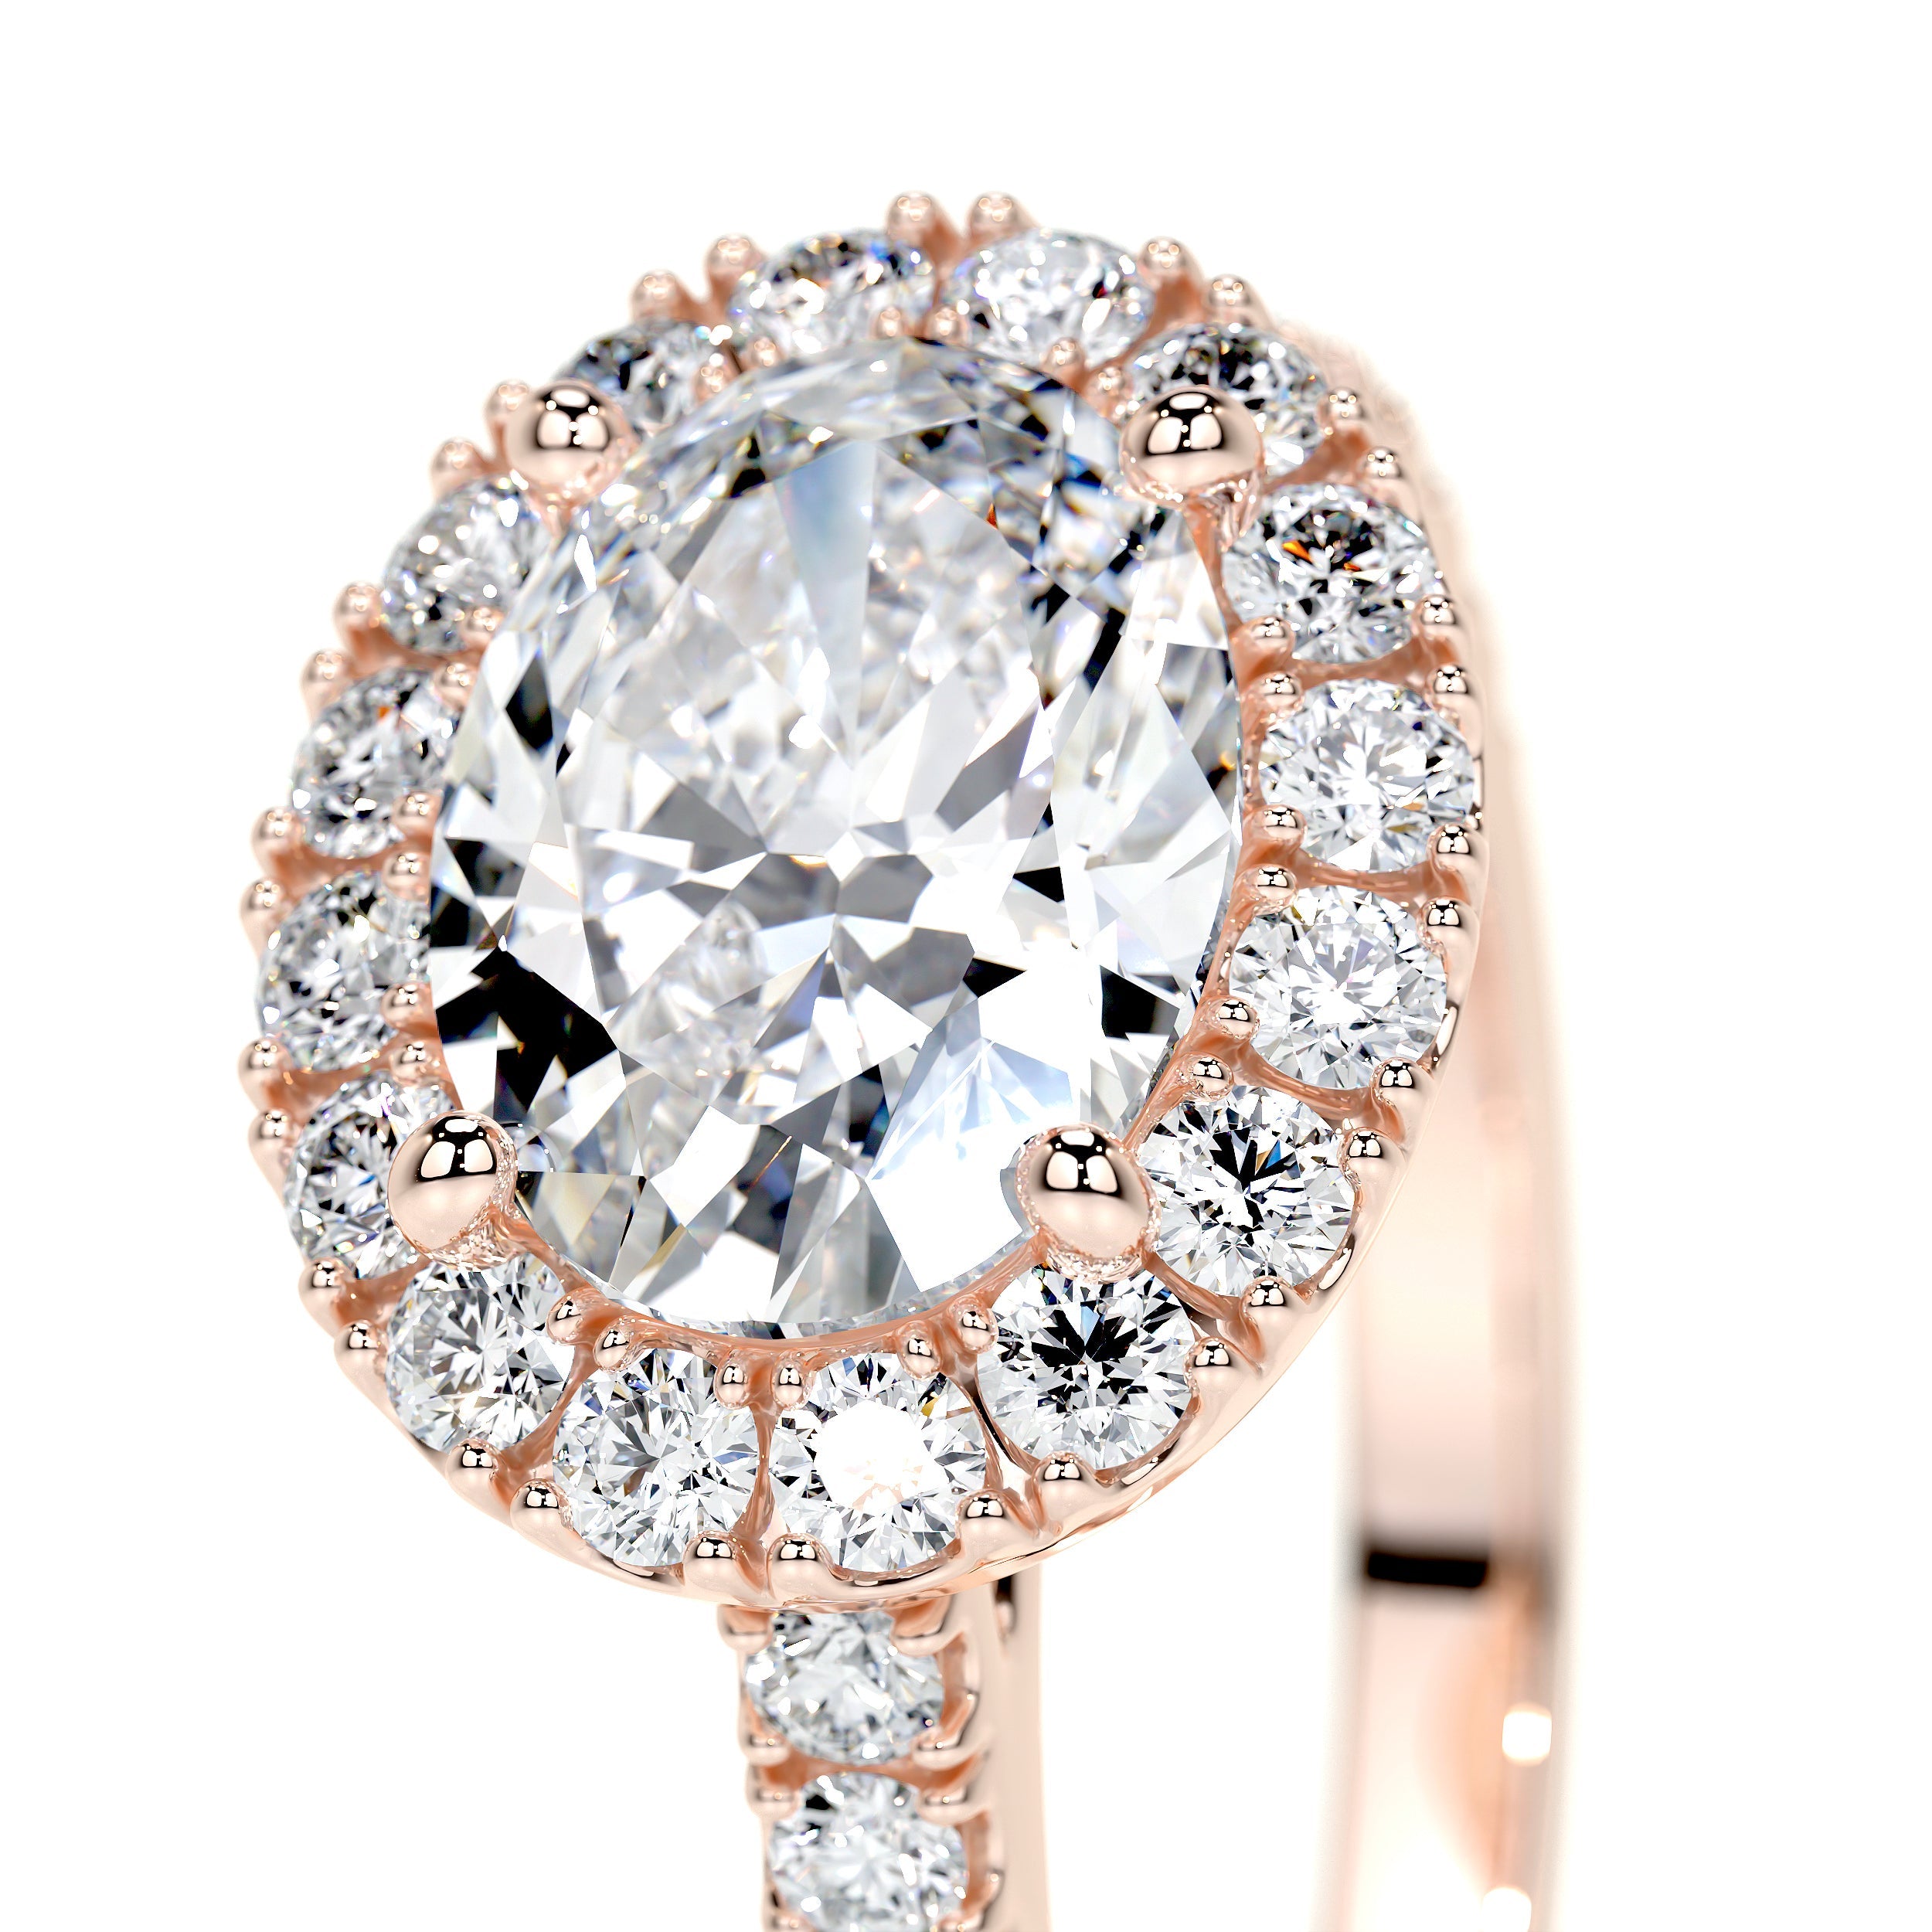 Alessandra Lab Grown Diamond Ring   (1.30 Carat) -14K Rose Gold